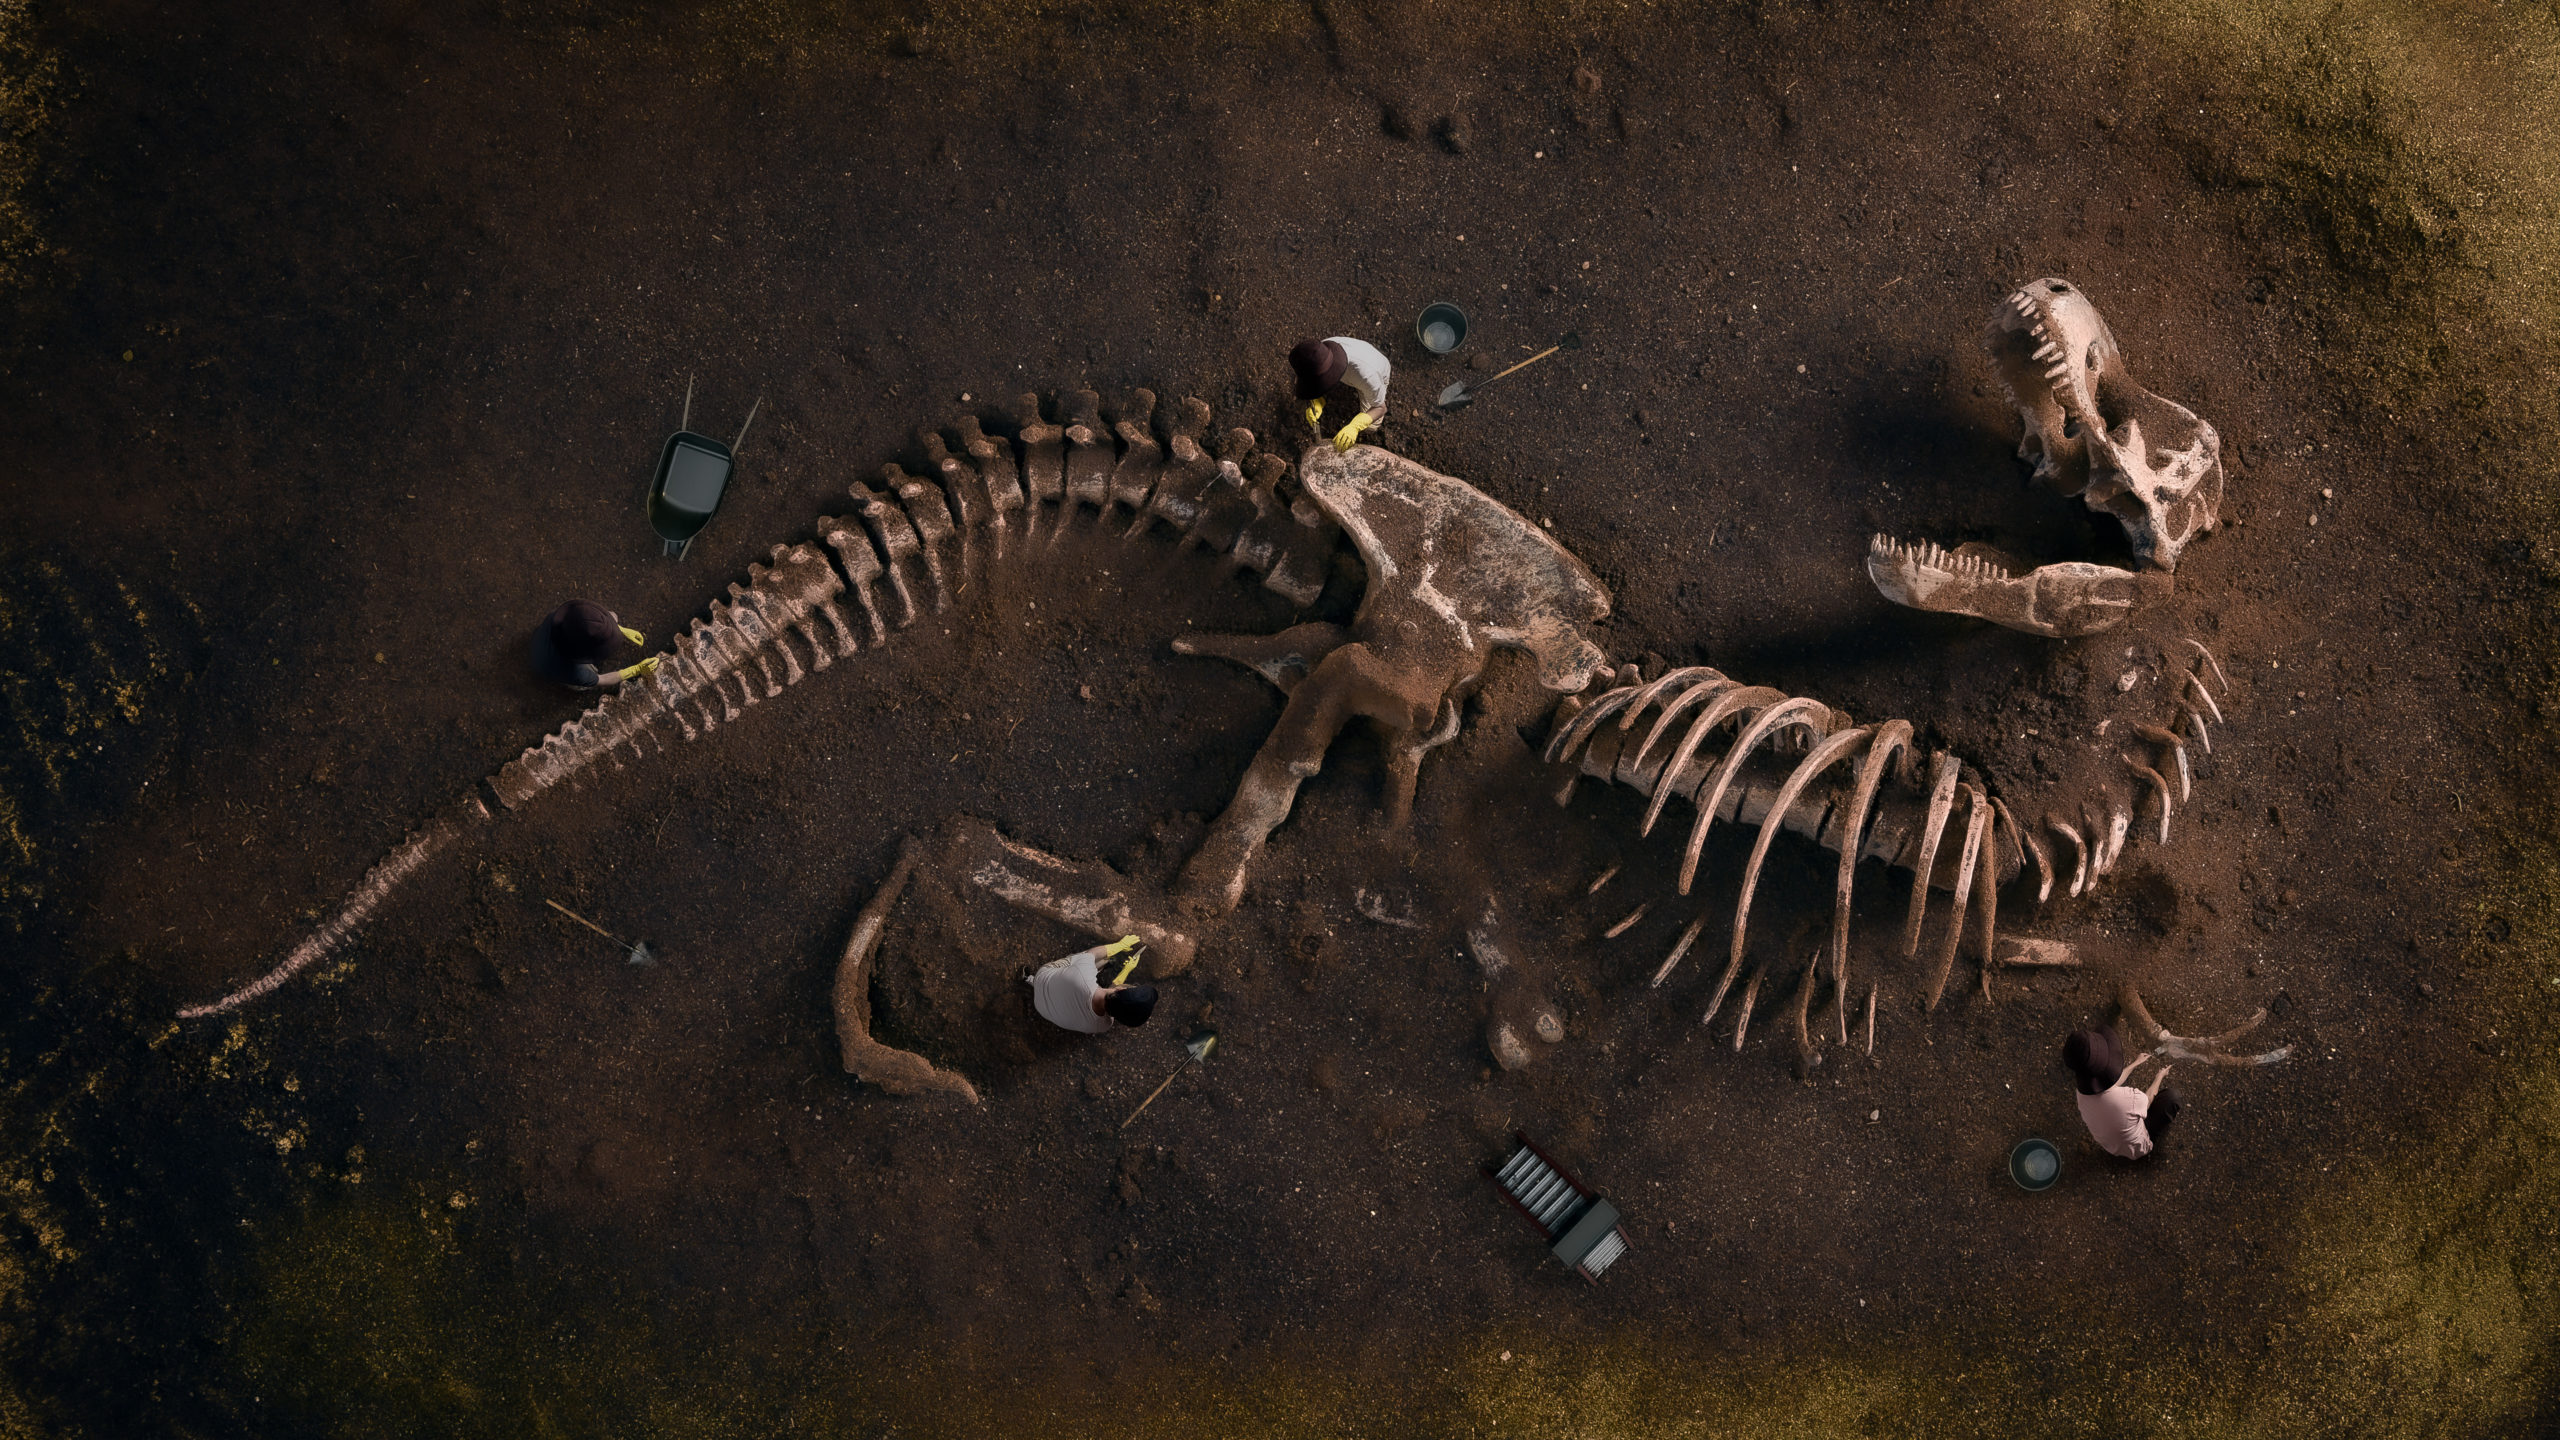 Kakliosaur fossil me3 🔥 Sale fossil 3103 is stock